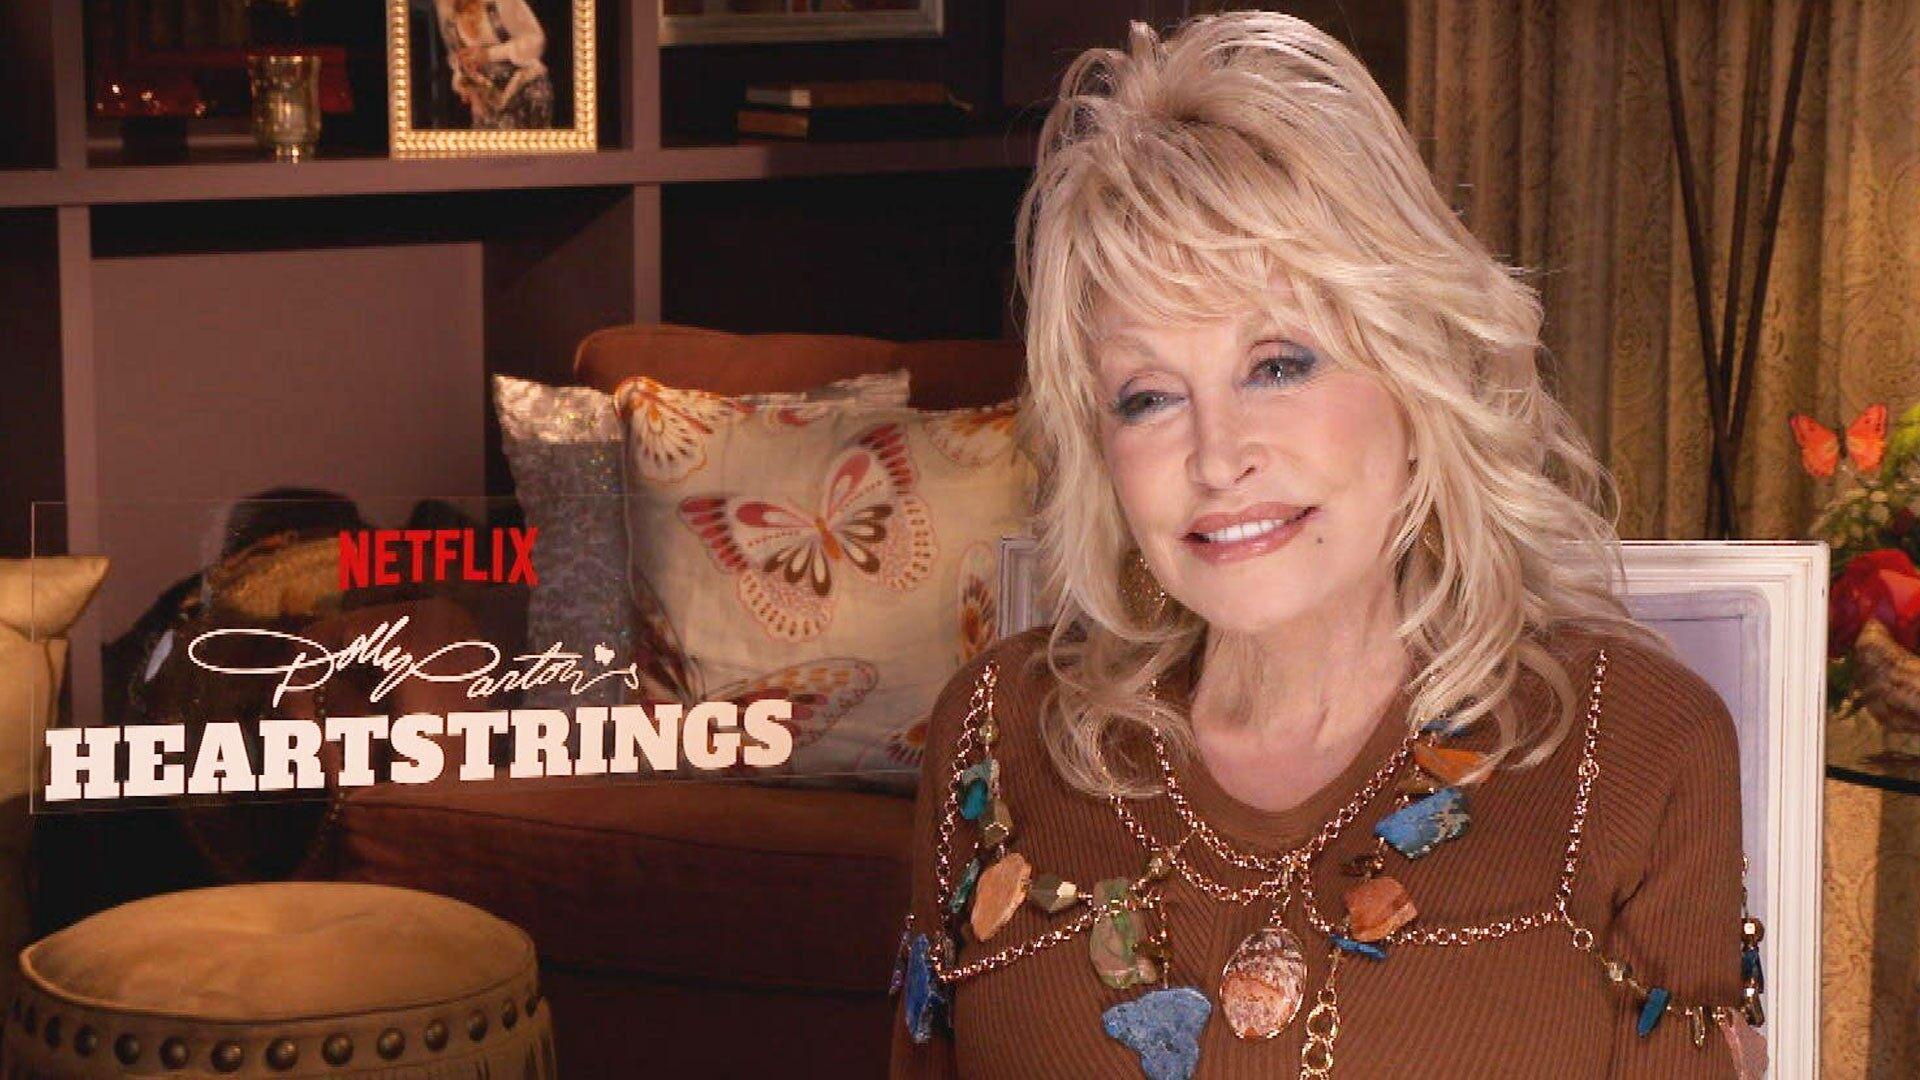 Check out Dolly Parton's “Heartstrings”.3